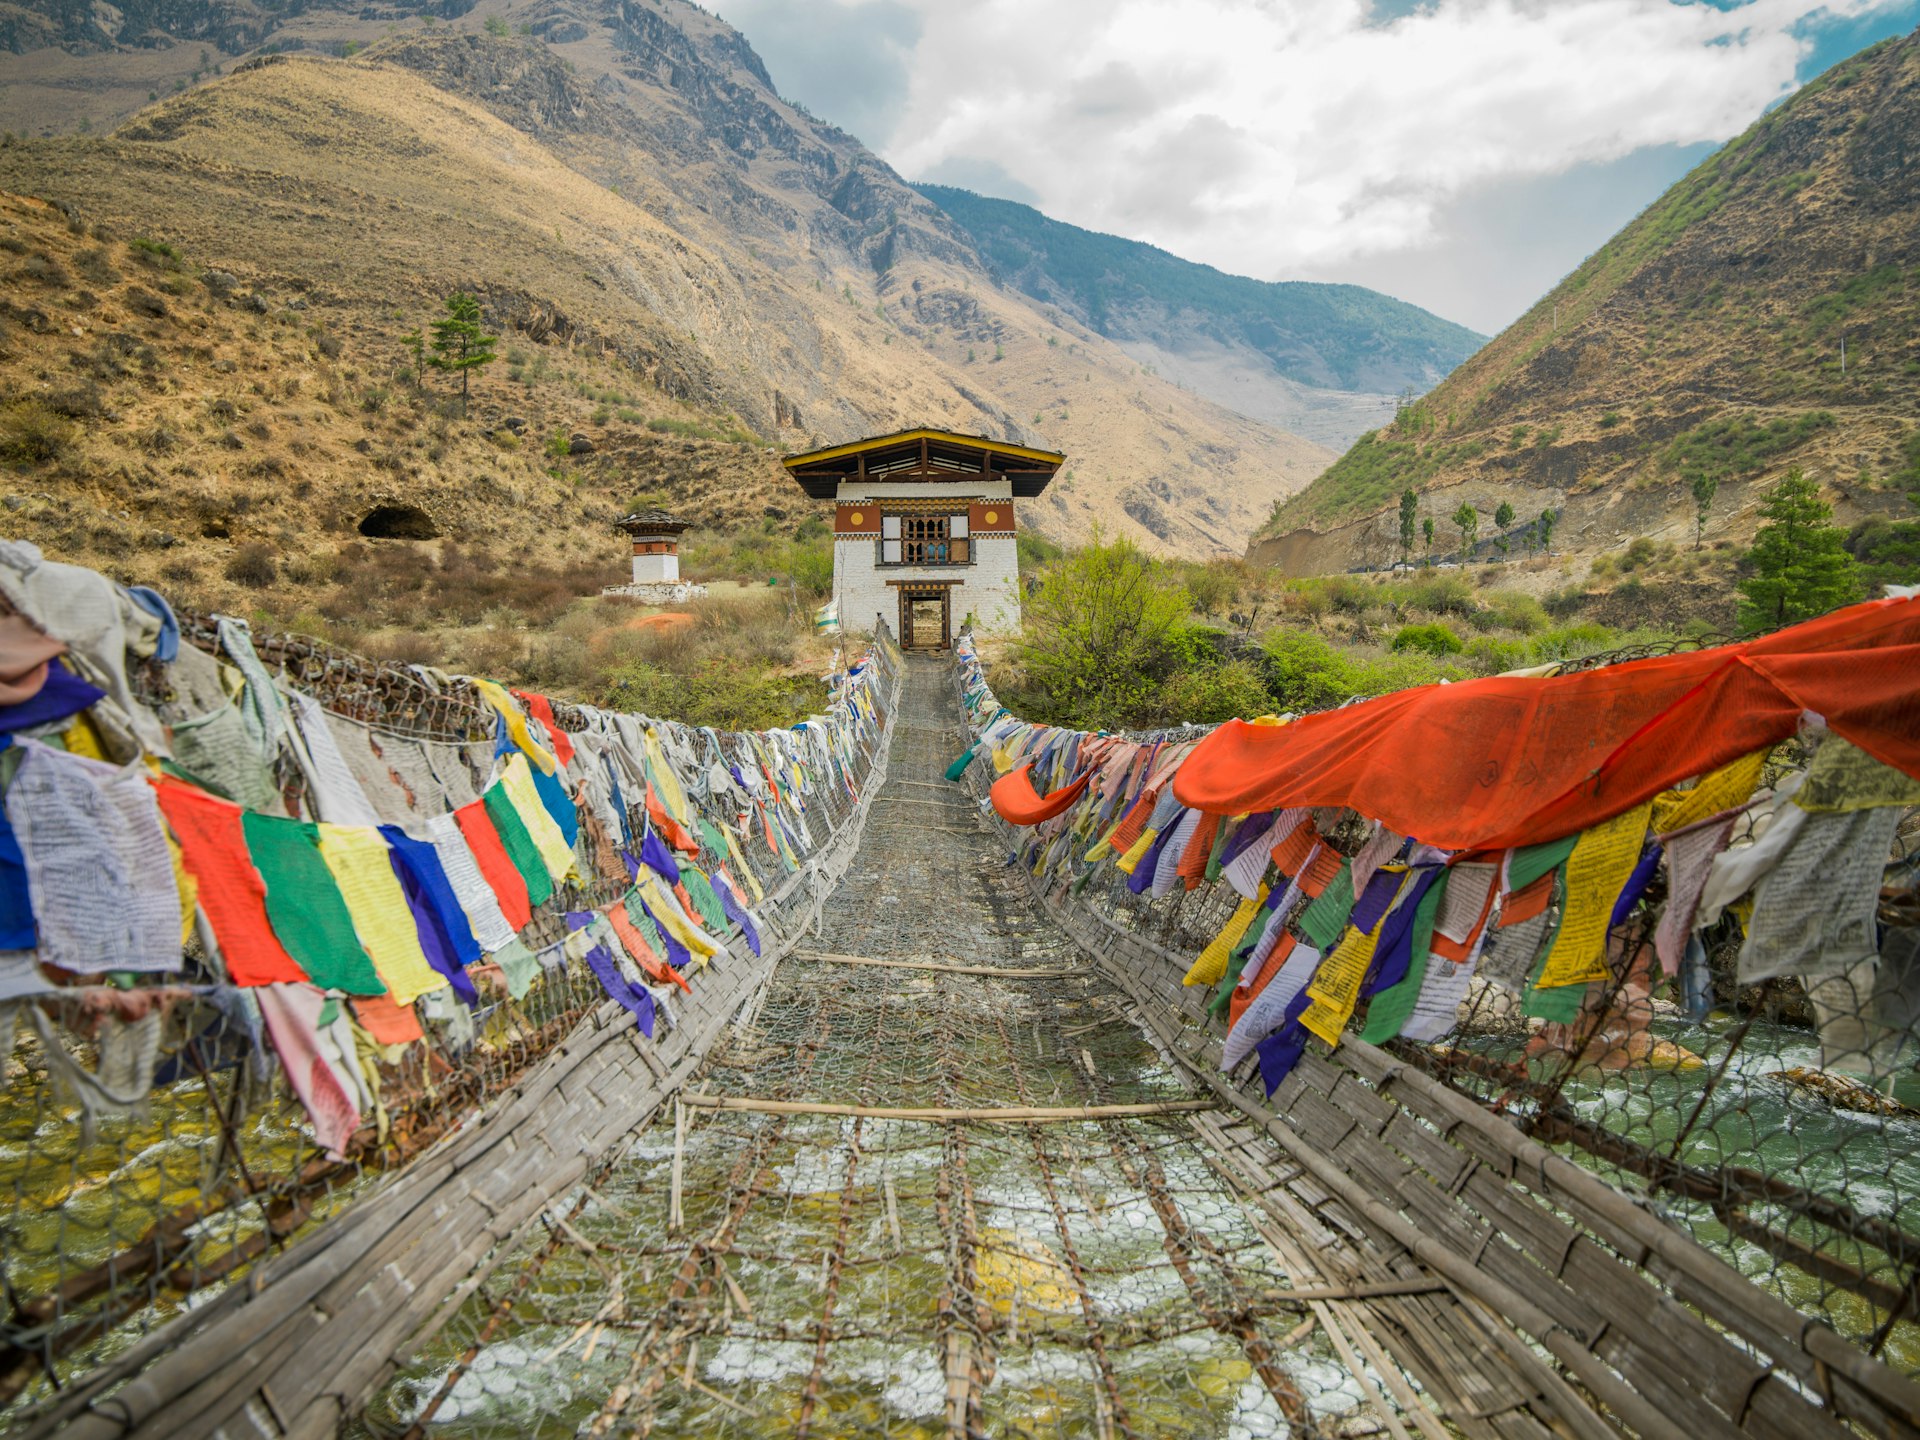 Tachog Lhakhang Iron Chain Bridge with colourful prayer flags on each side of bridge, Bhutan